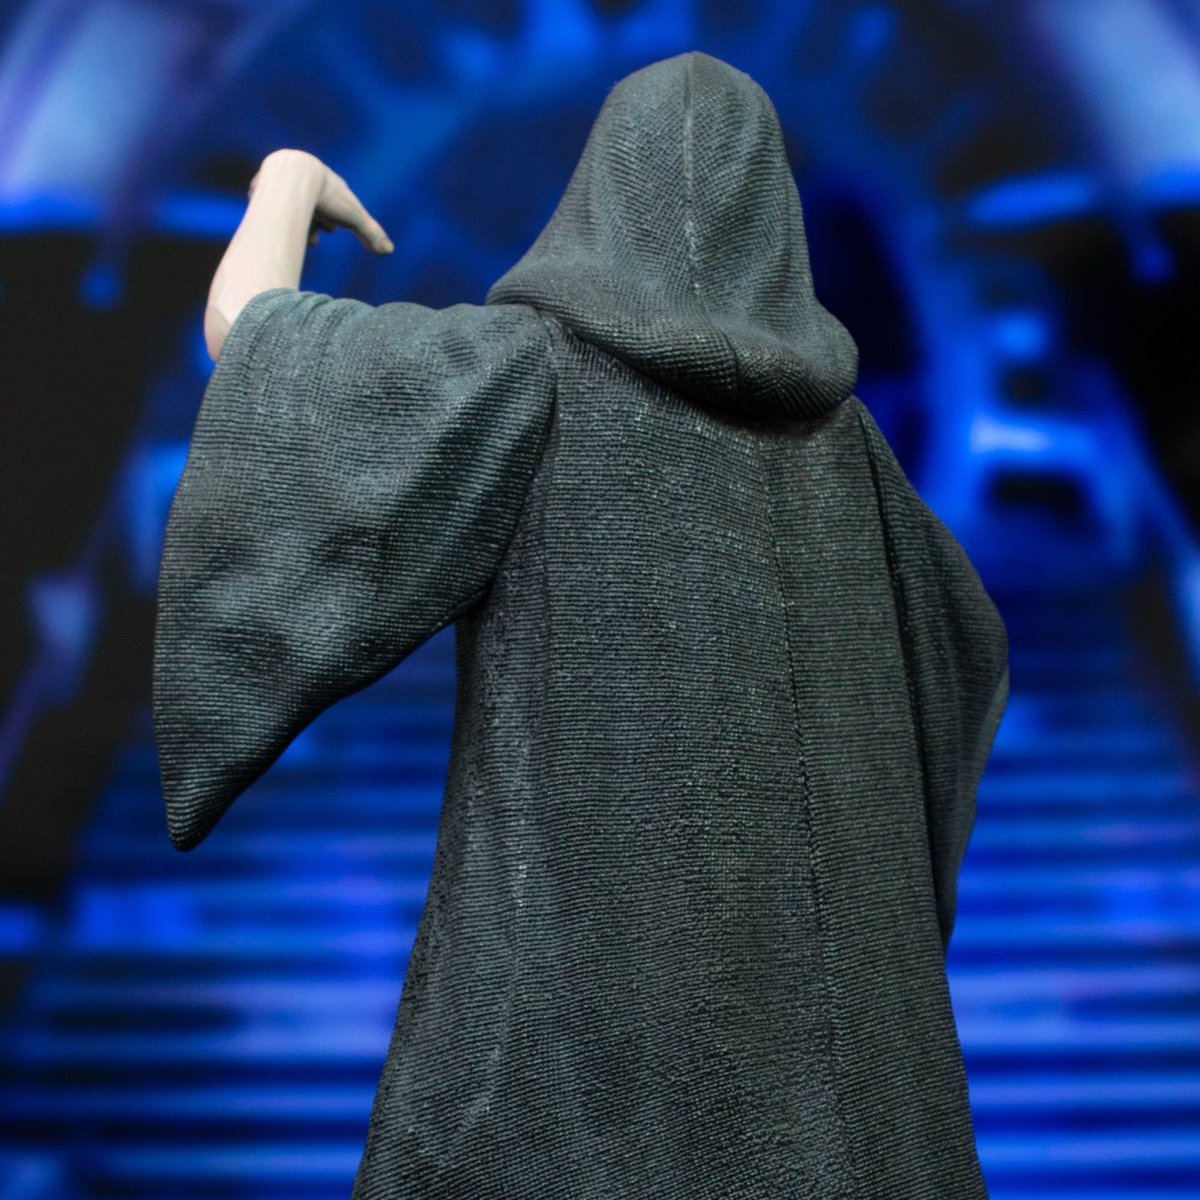 🚨NOVEDAD🚨
📸 Emperor Palpatine
🎬 Star Wars: Ep. VI Return of the Jedi
👉 Gentle Giant
➡️ Milestone Statue 1/6
📅 Q3 2024
💶 250$
📝 Limitada a 2000 unidades.

@GentleGiant | #Palpatine #StarWars #ROTJ